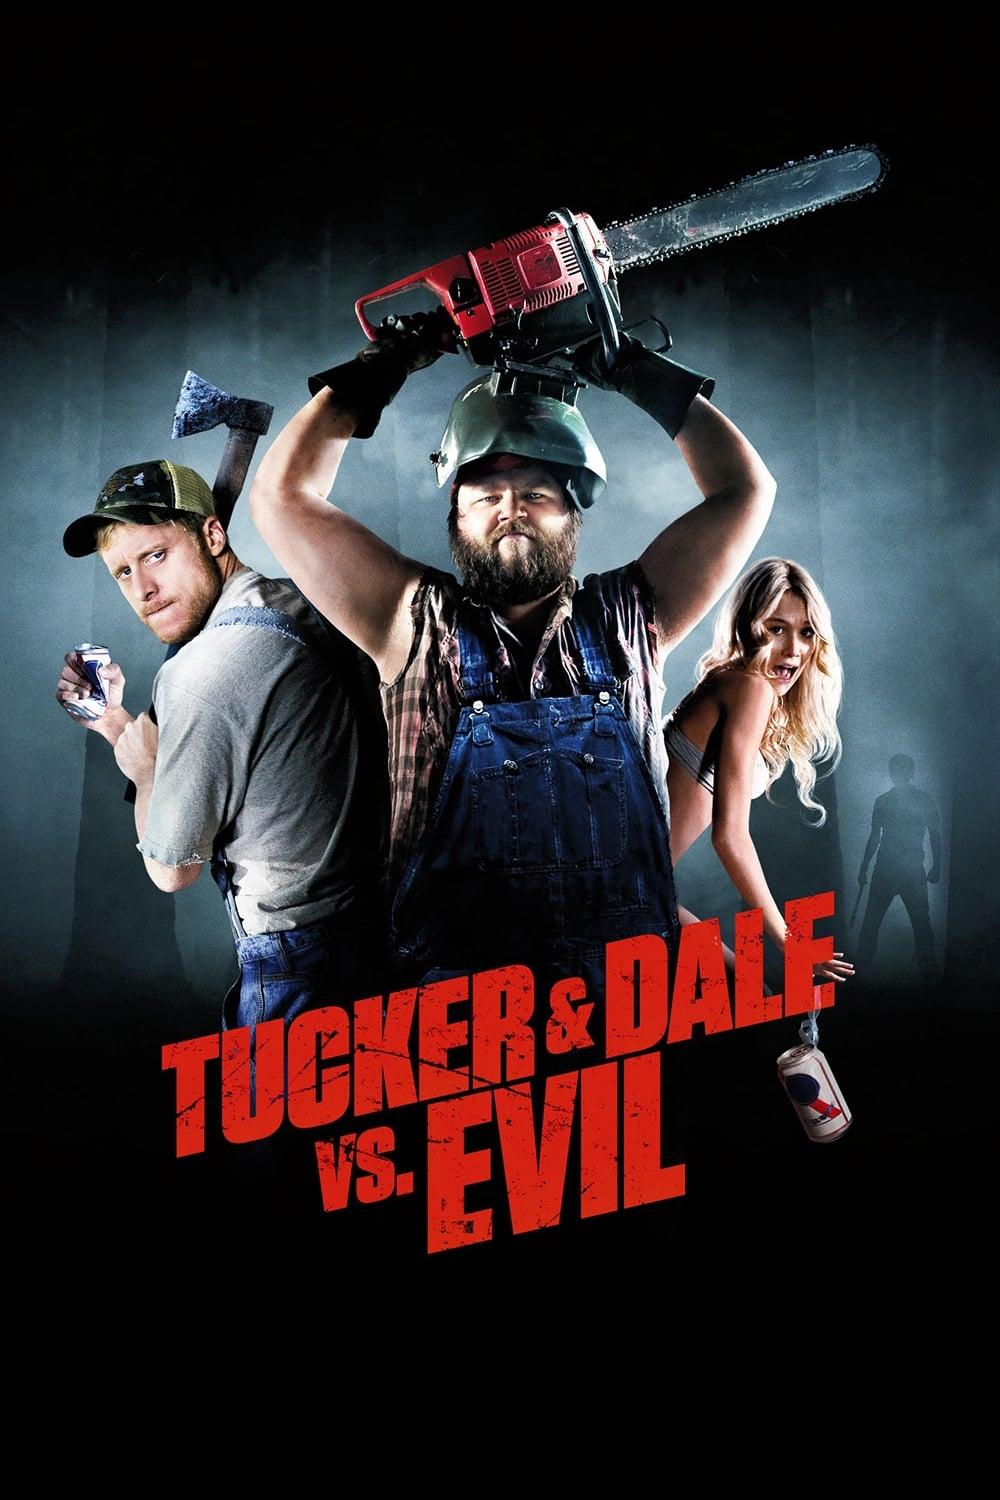 Tucker and Dale vs. Evil poster